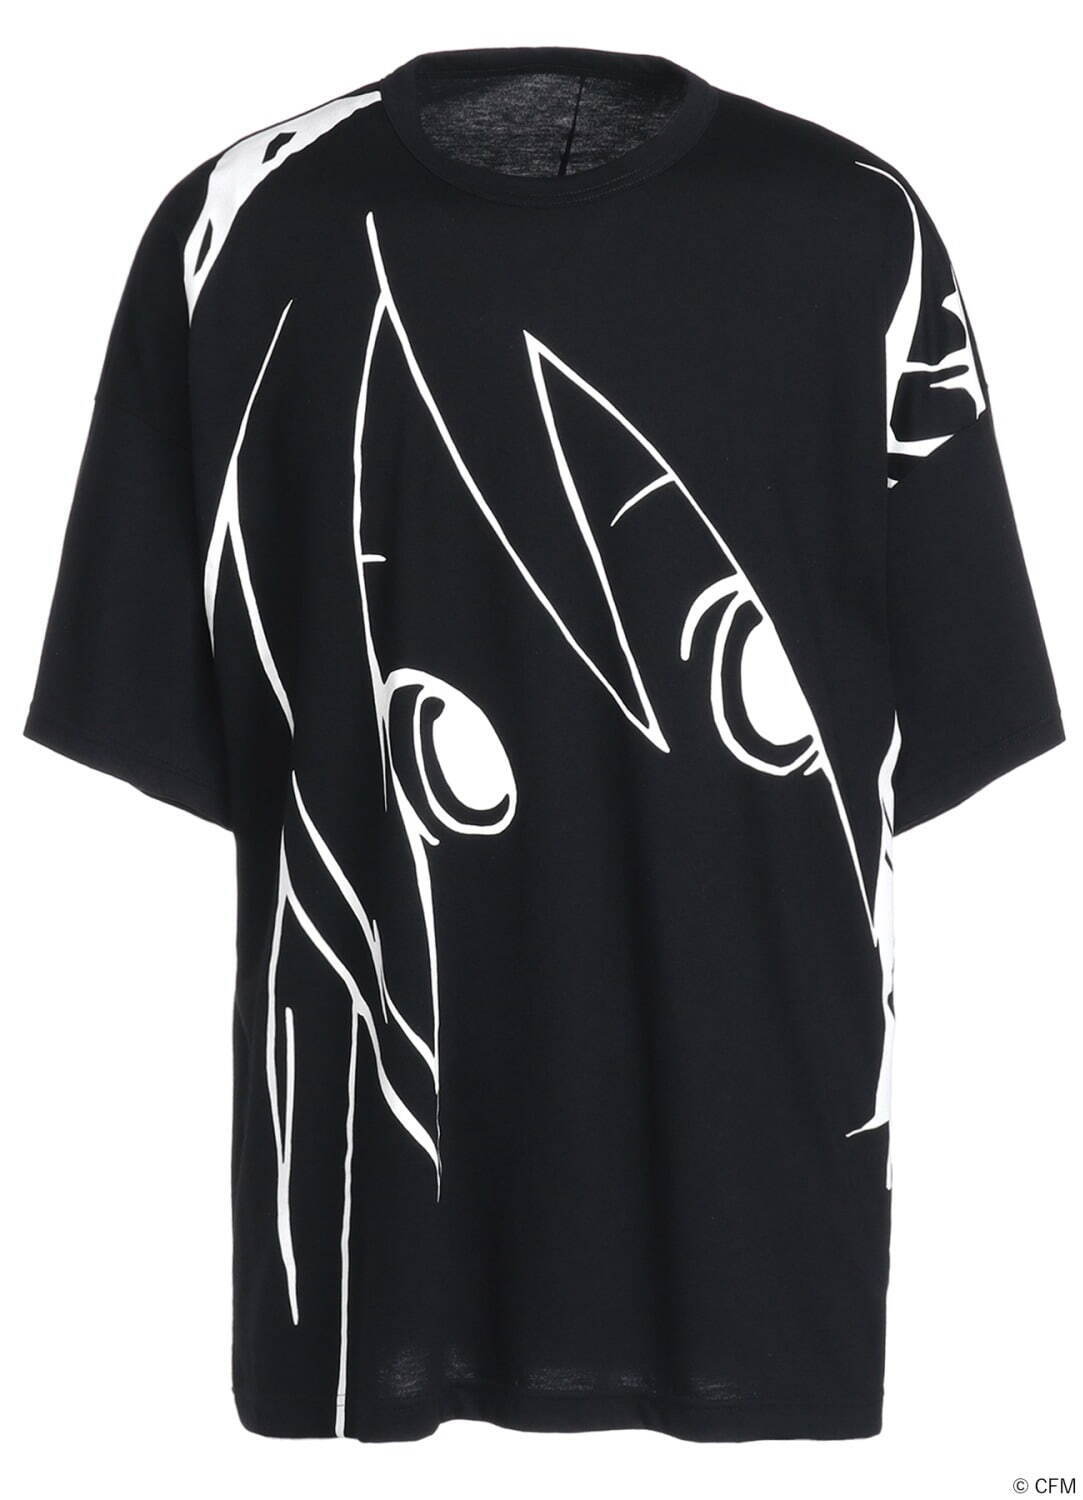 Tシャツ(顔) 24,200円